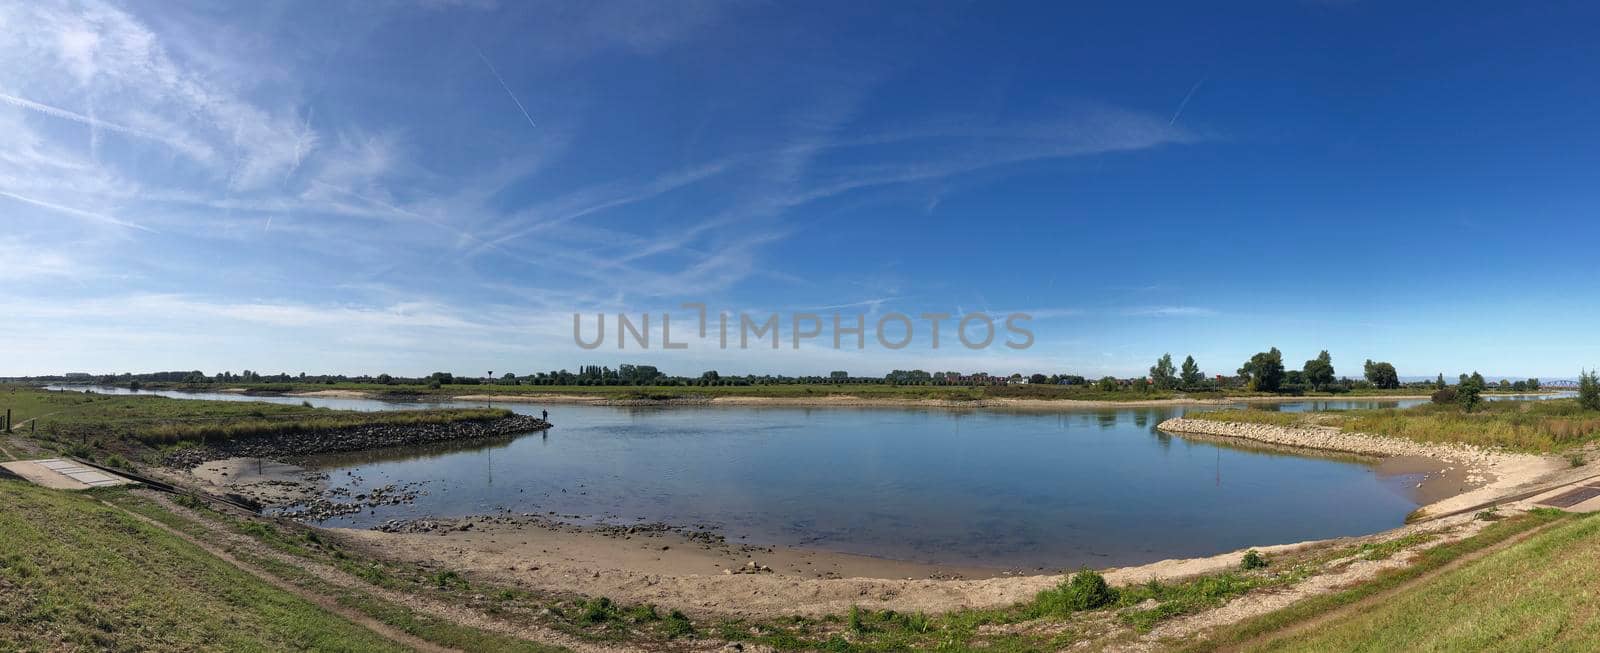 Panorama from the IJssel river around Zutphen by traveltelly